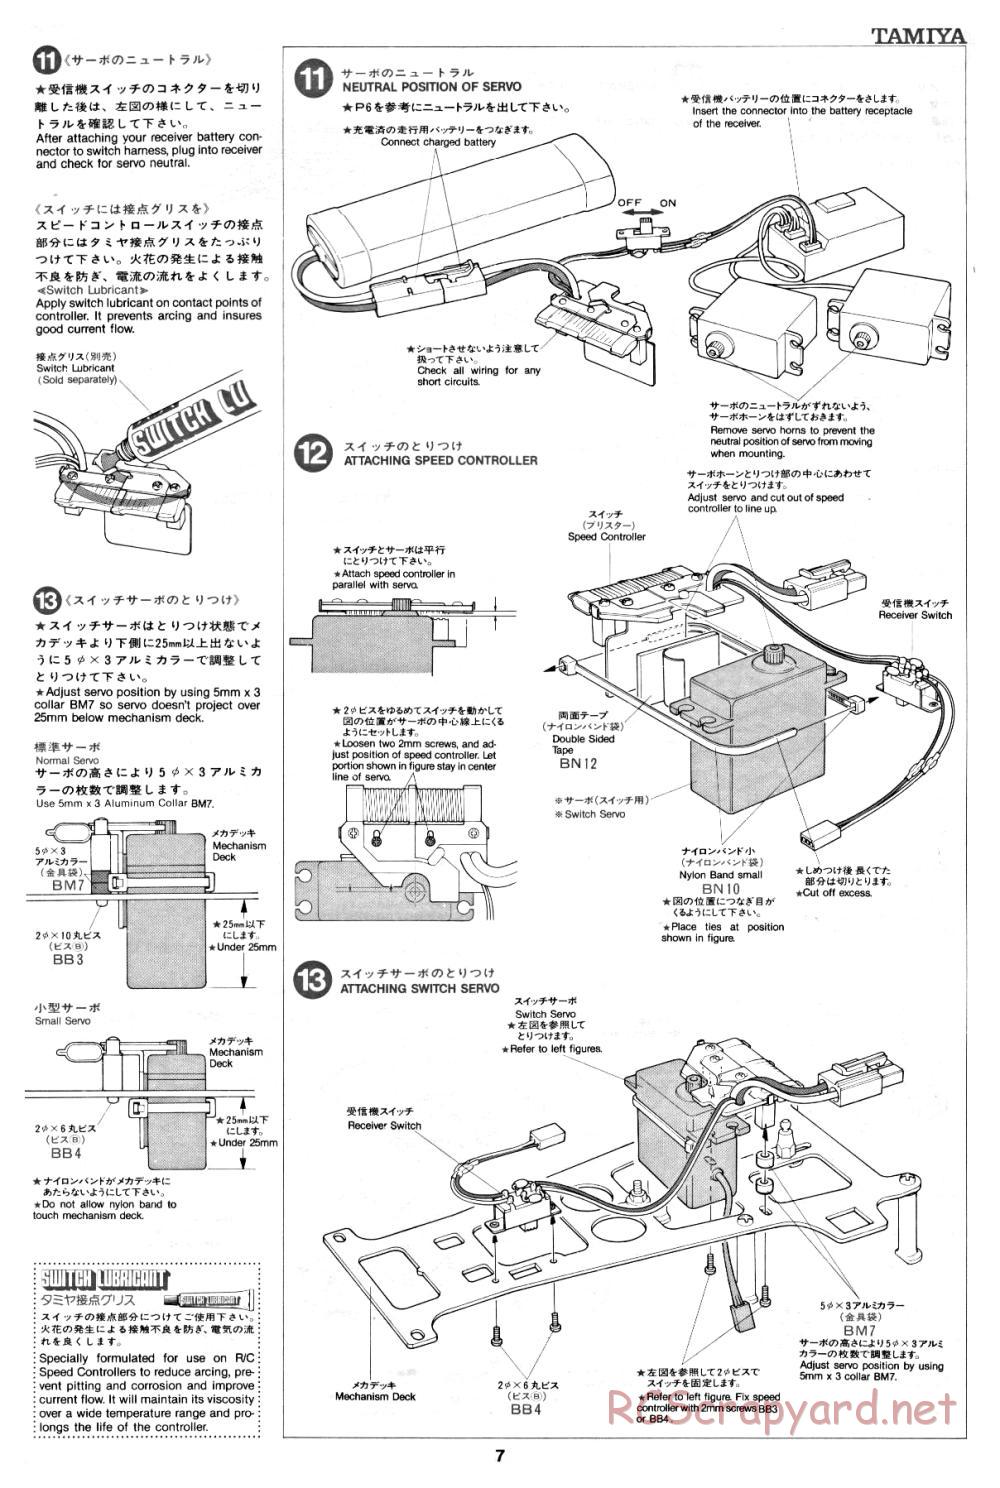 Tamiya - Toyota Tom's 84C - RM MK.6 - 58049 - Manual - Page 7